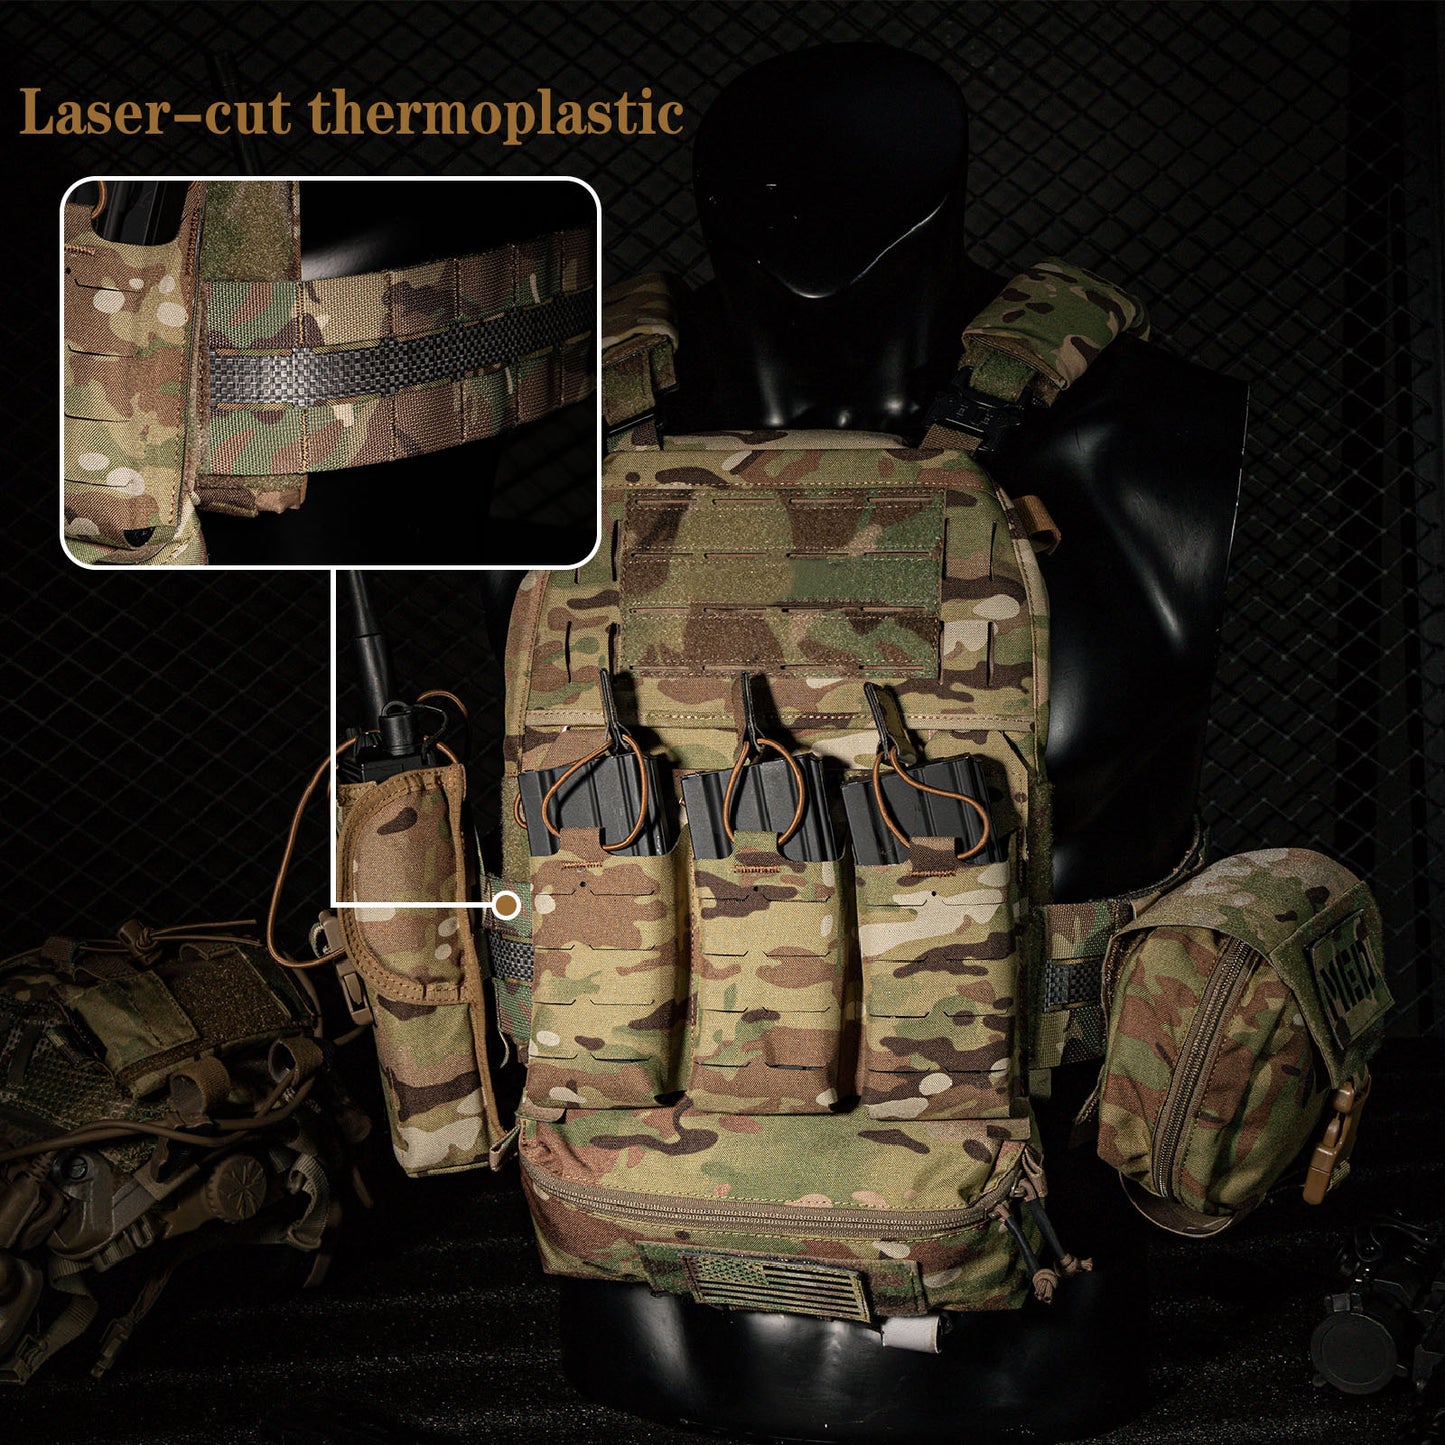 KRYDEX Tactical 3” Assault Cummerbund Tegris Rigid MOLLE Cummerbund for Tactical Vest Slickster FCPC LBT